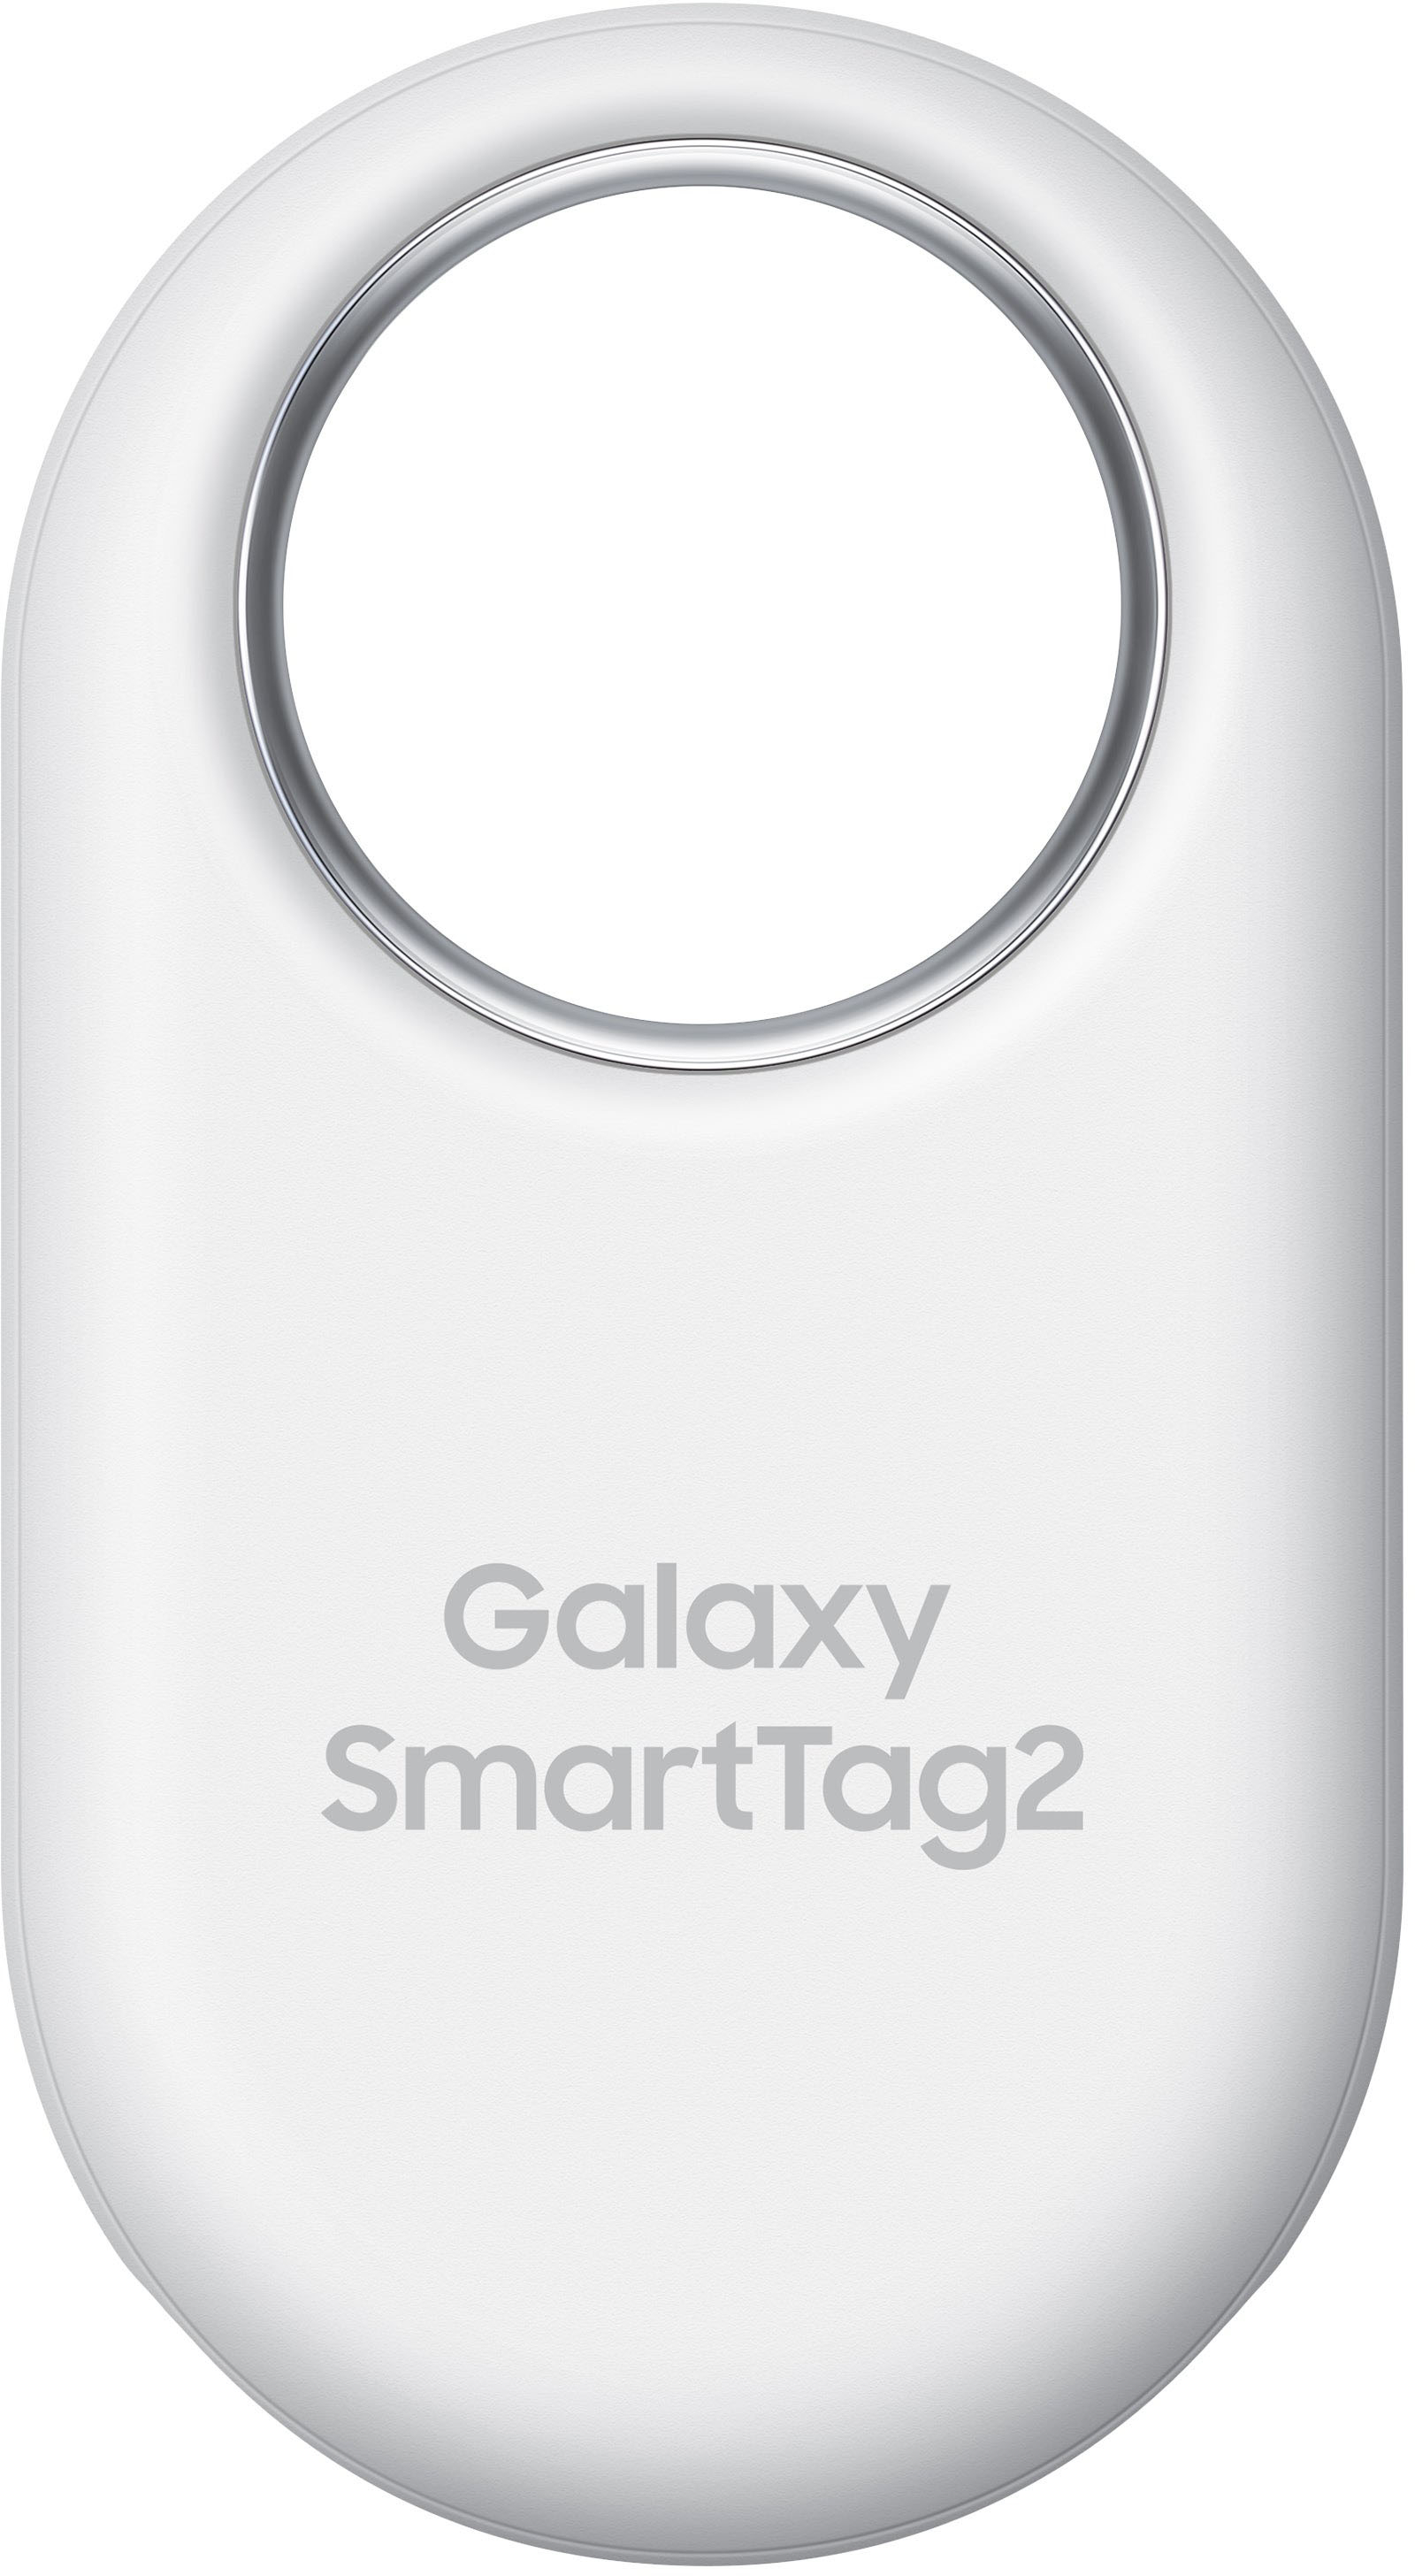 Samsung Galaxy SmartTag2 - Worth the upgrade over SmartTag 1? 